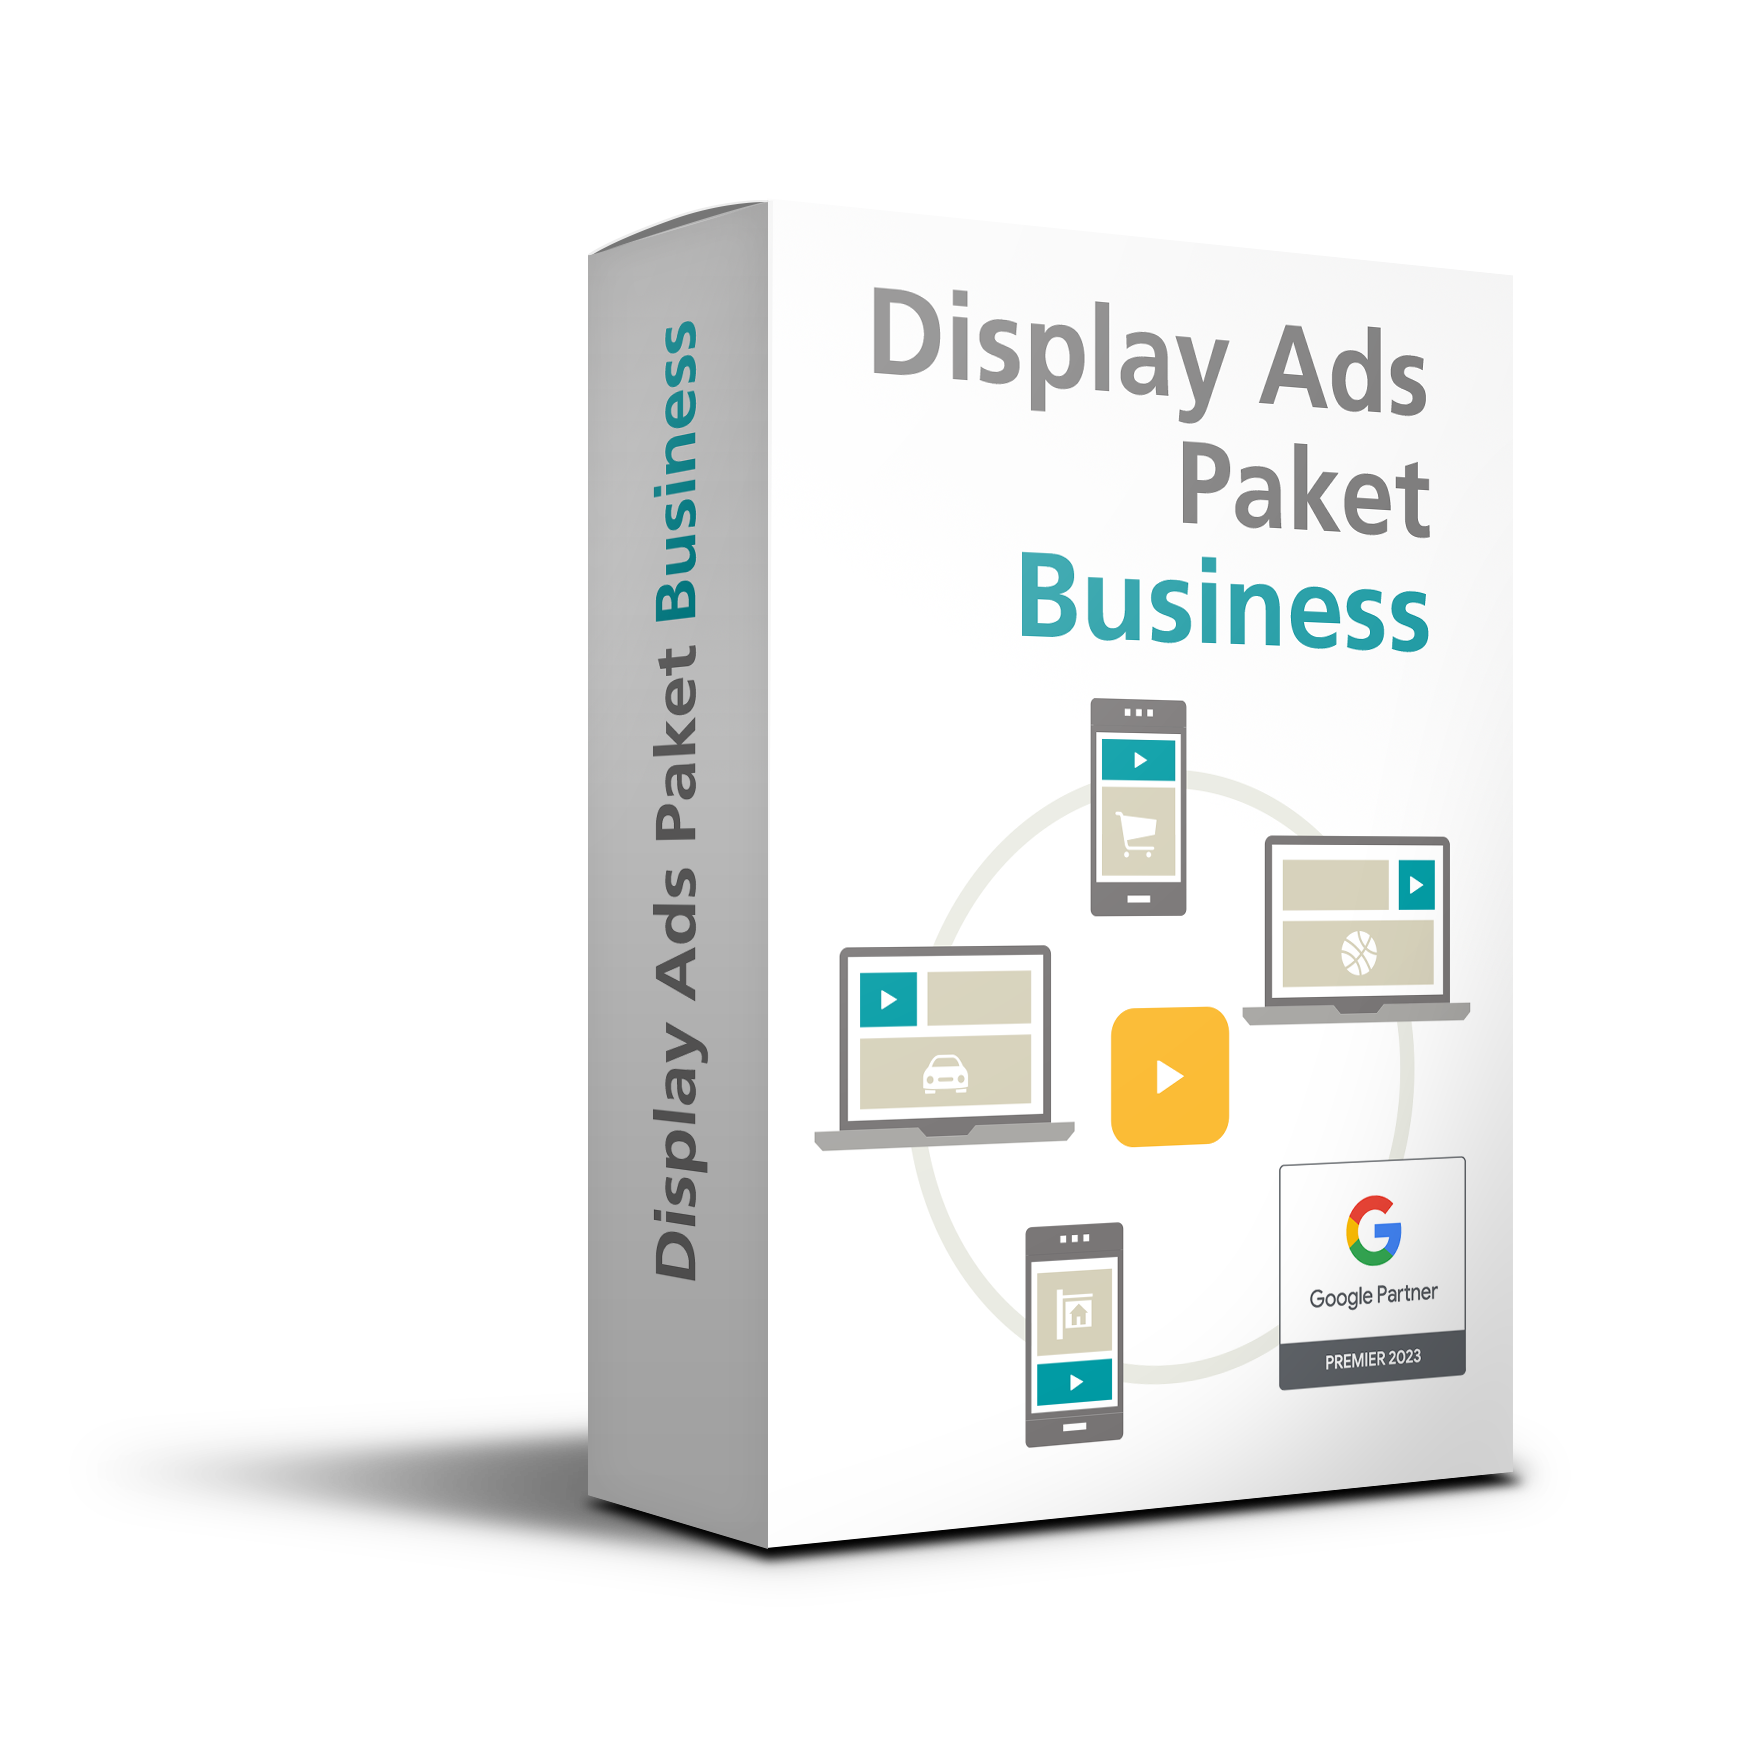 Google Display Ads Paket Business